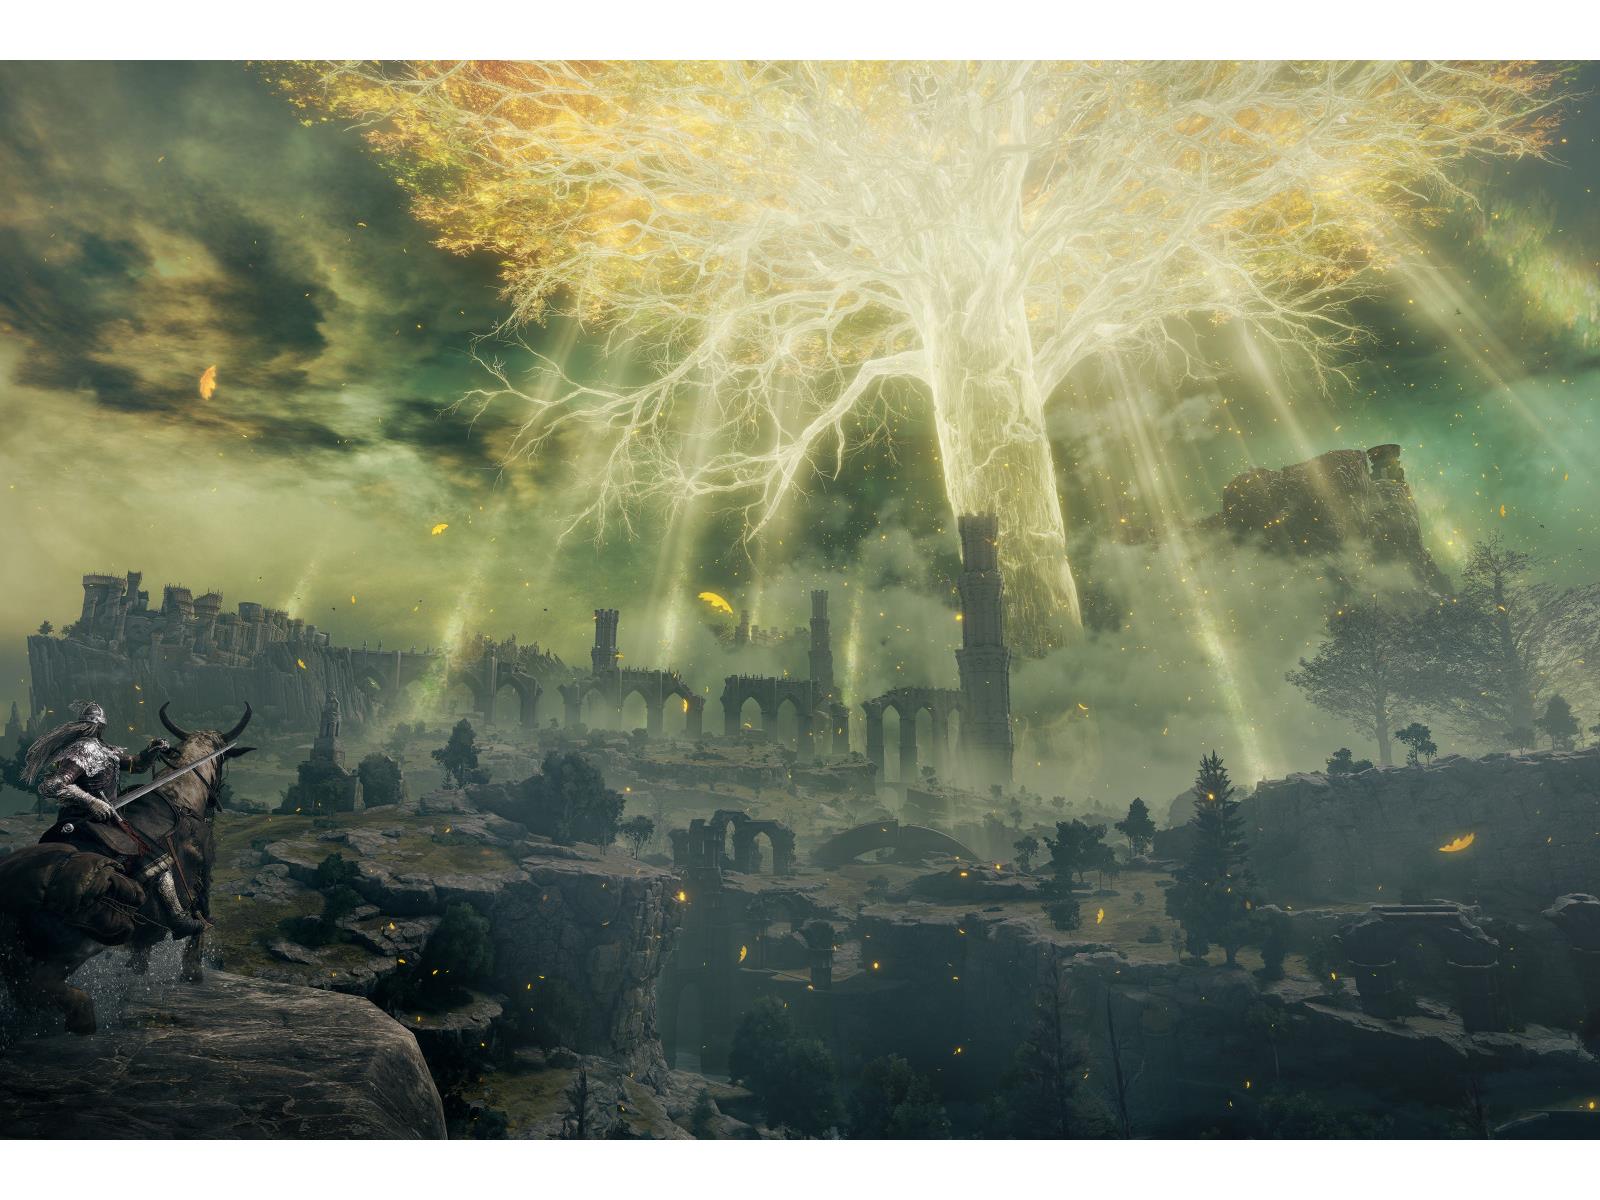 Hidetaka Miyazaki Talks About 'Demon's Souls' And 'King's Field